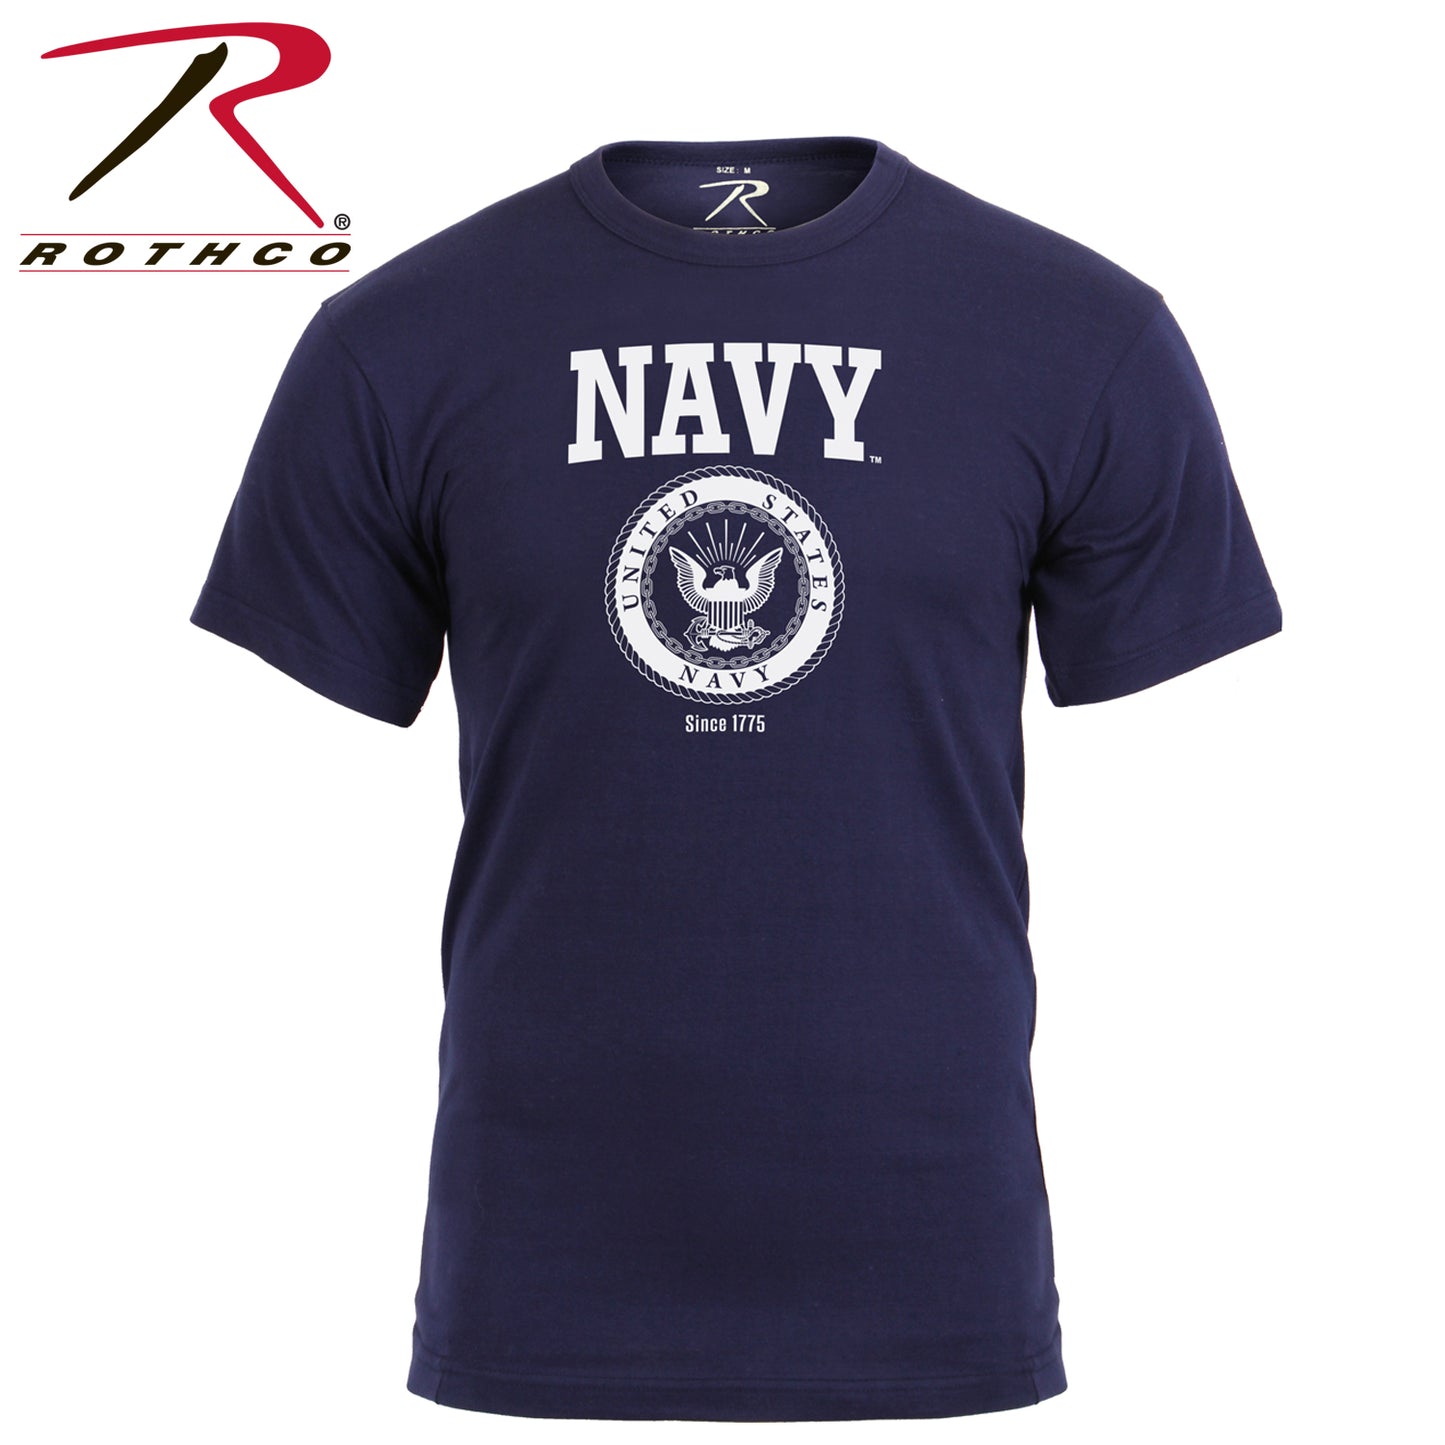 U.S. Navy Emblem T-Shirt